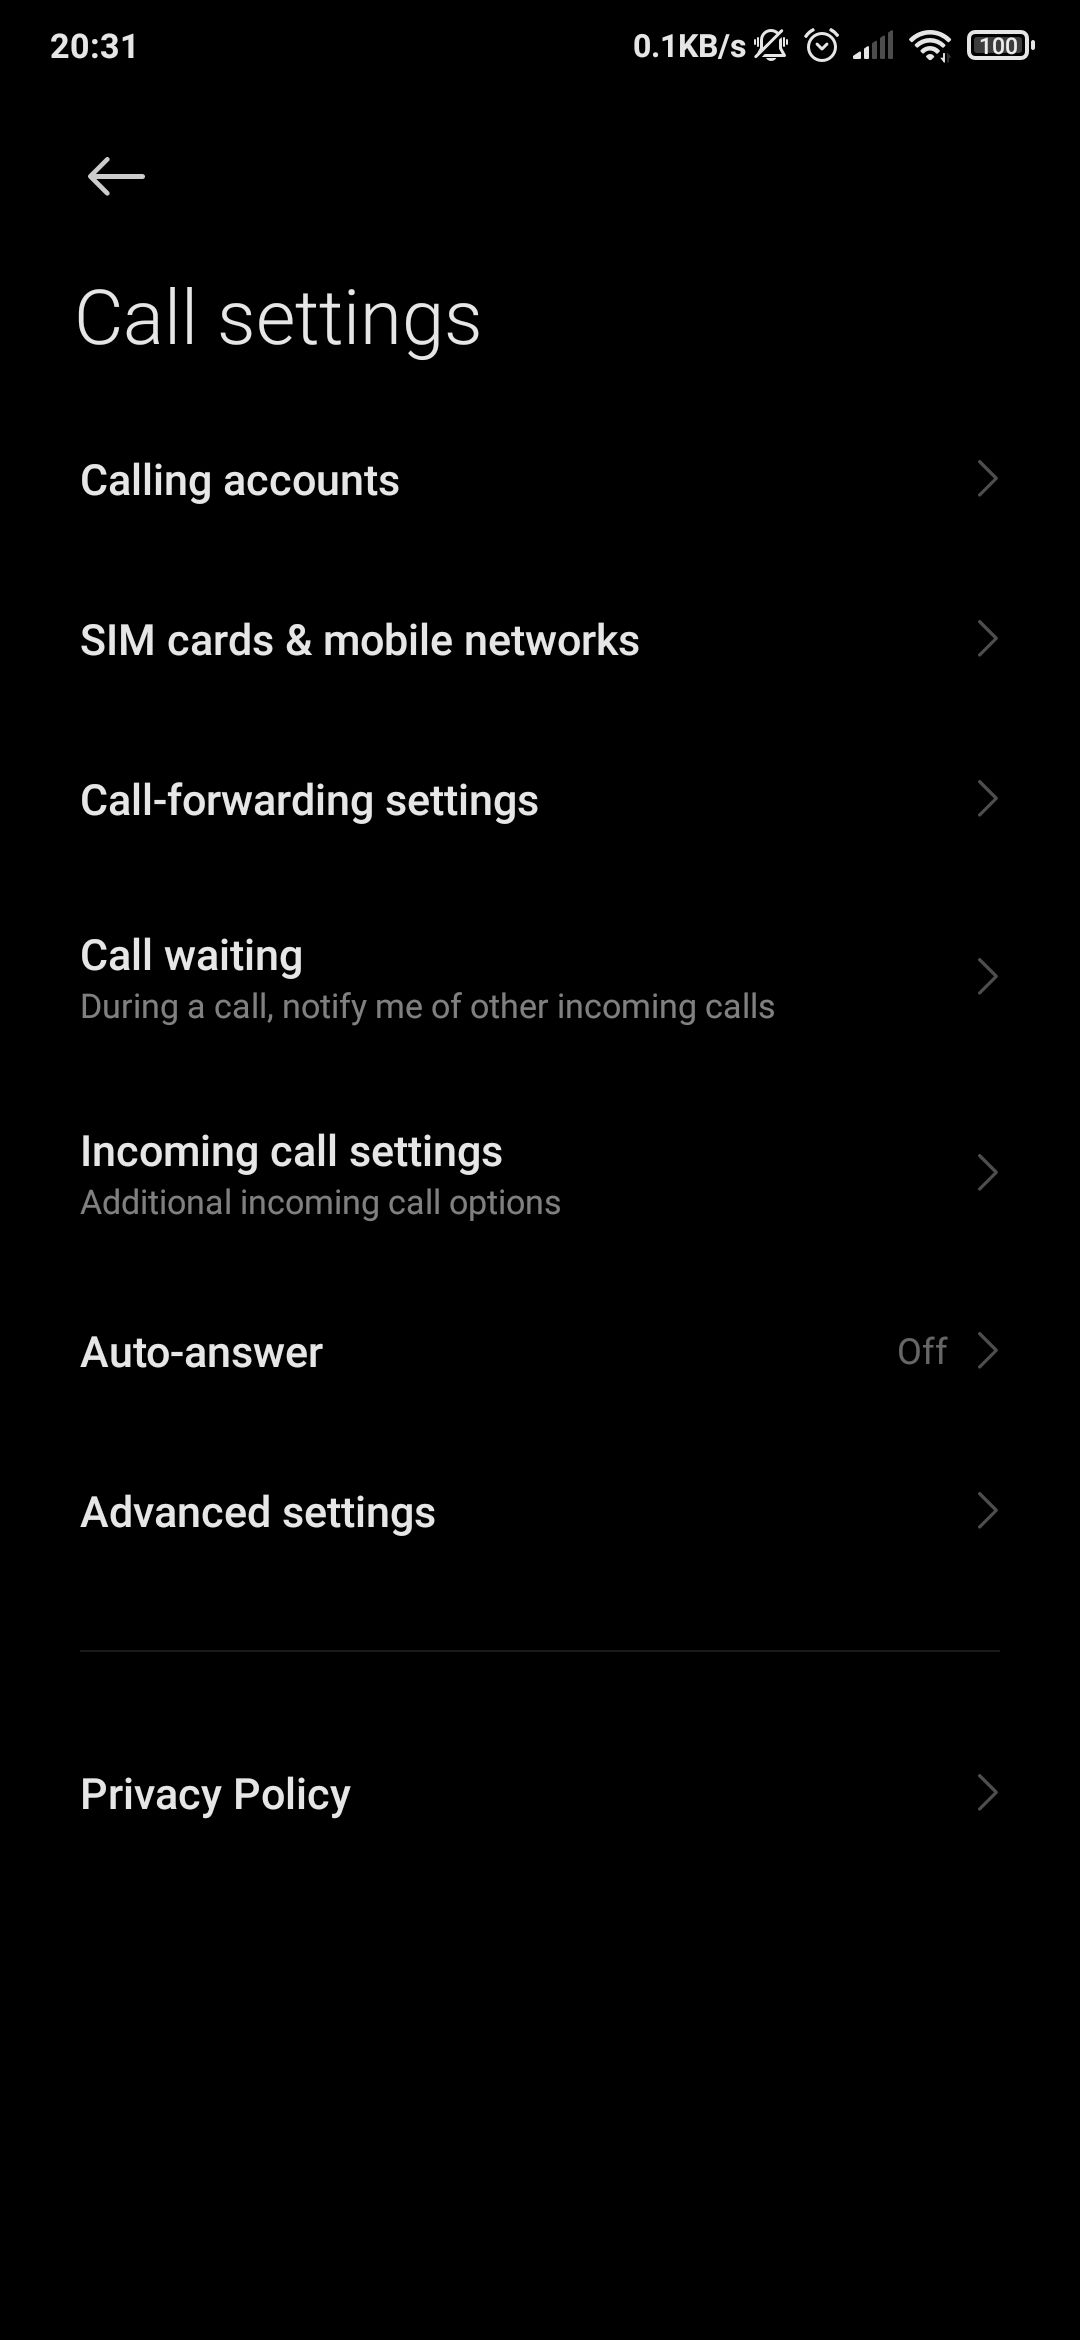 Calling account options in Google phone app